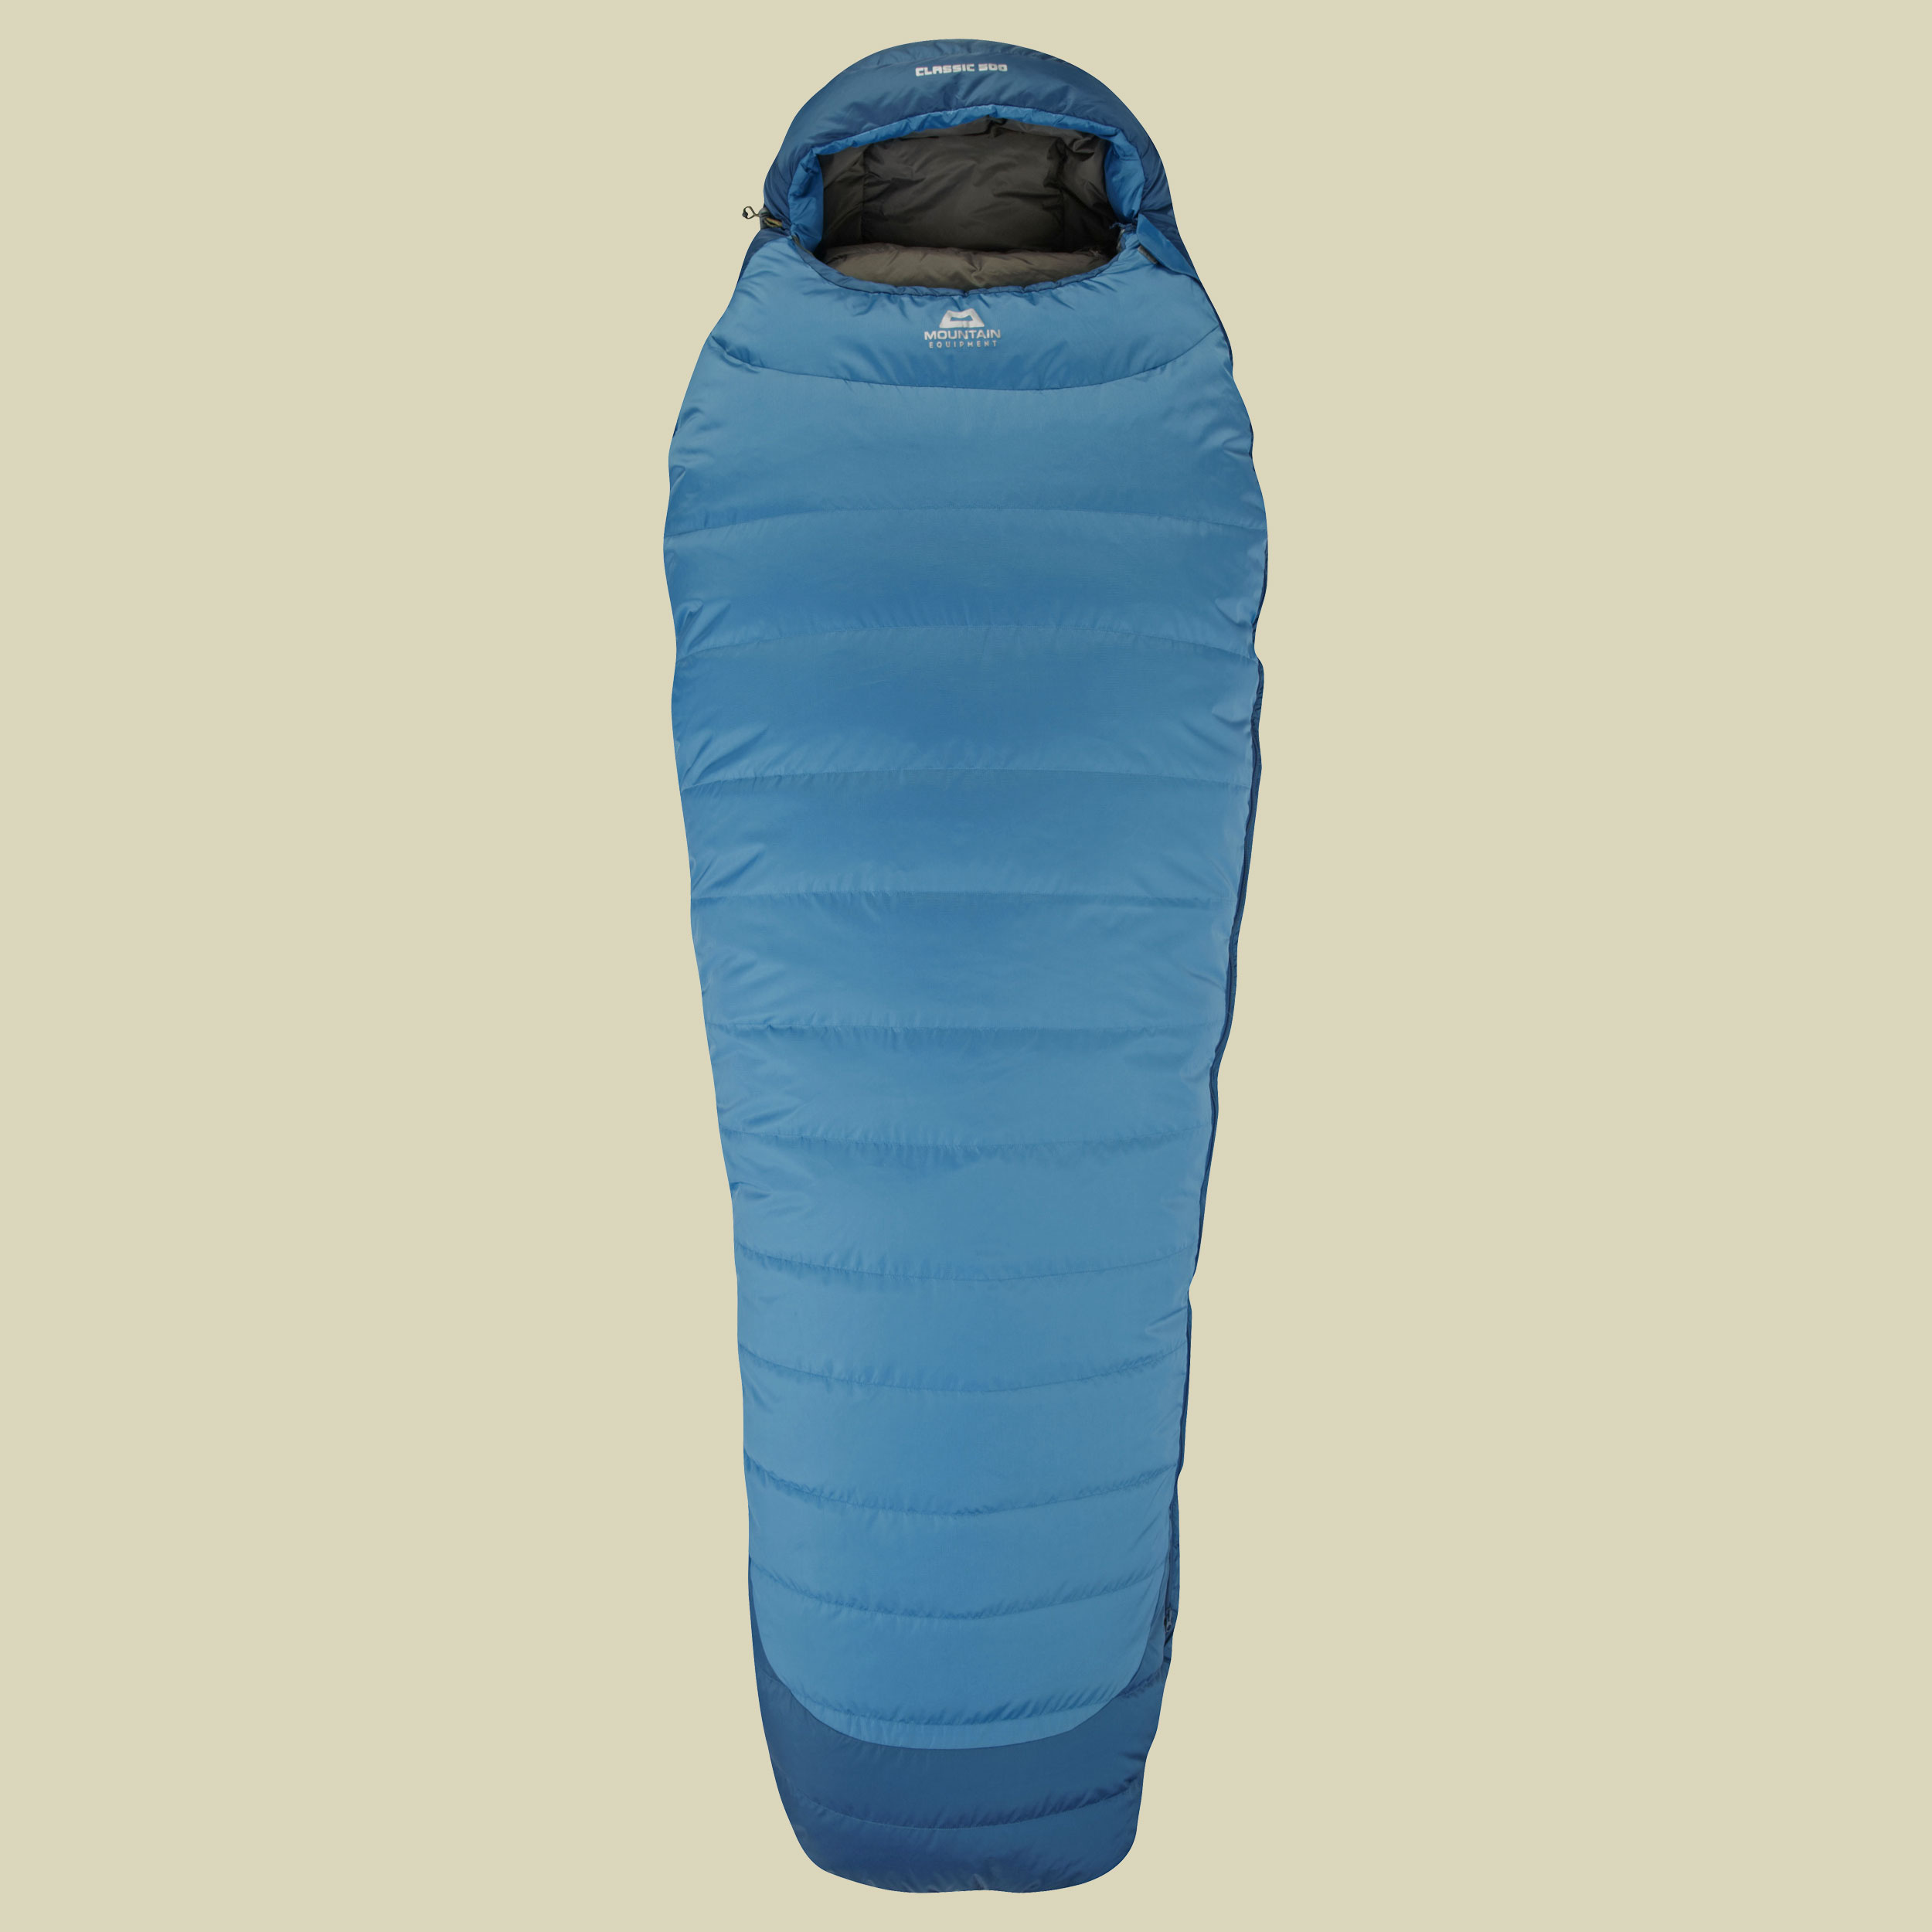 Classic 500 bis Körpergröße Schlafsack XL 200 cm cm Farbe Neptune-Nautilus, Reißverschluss Schlafsack rechts